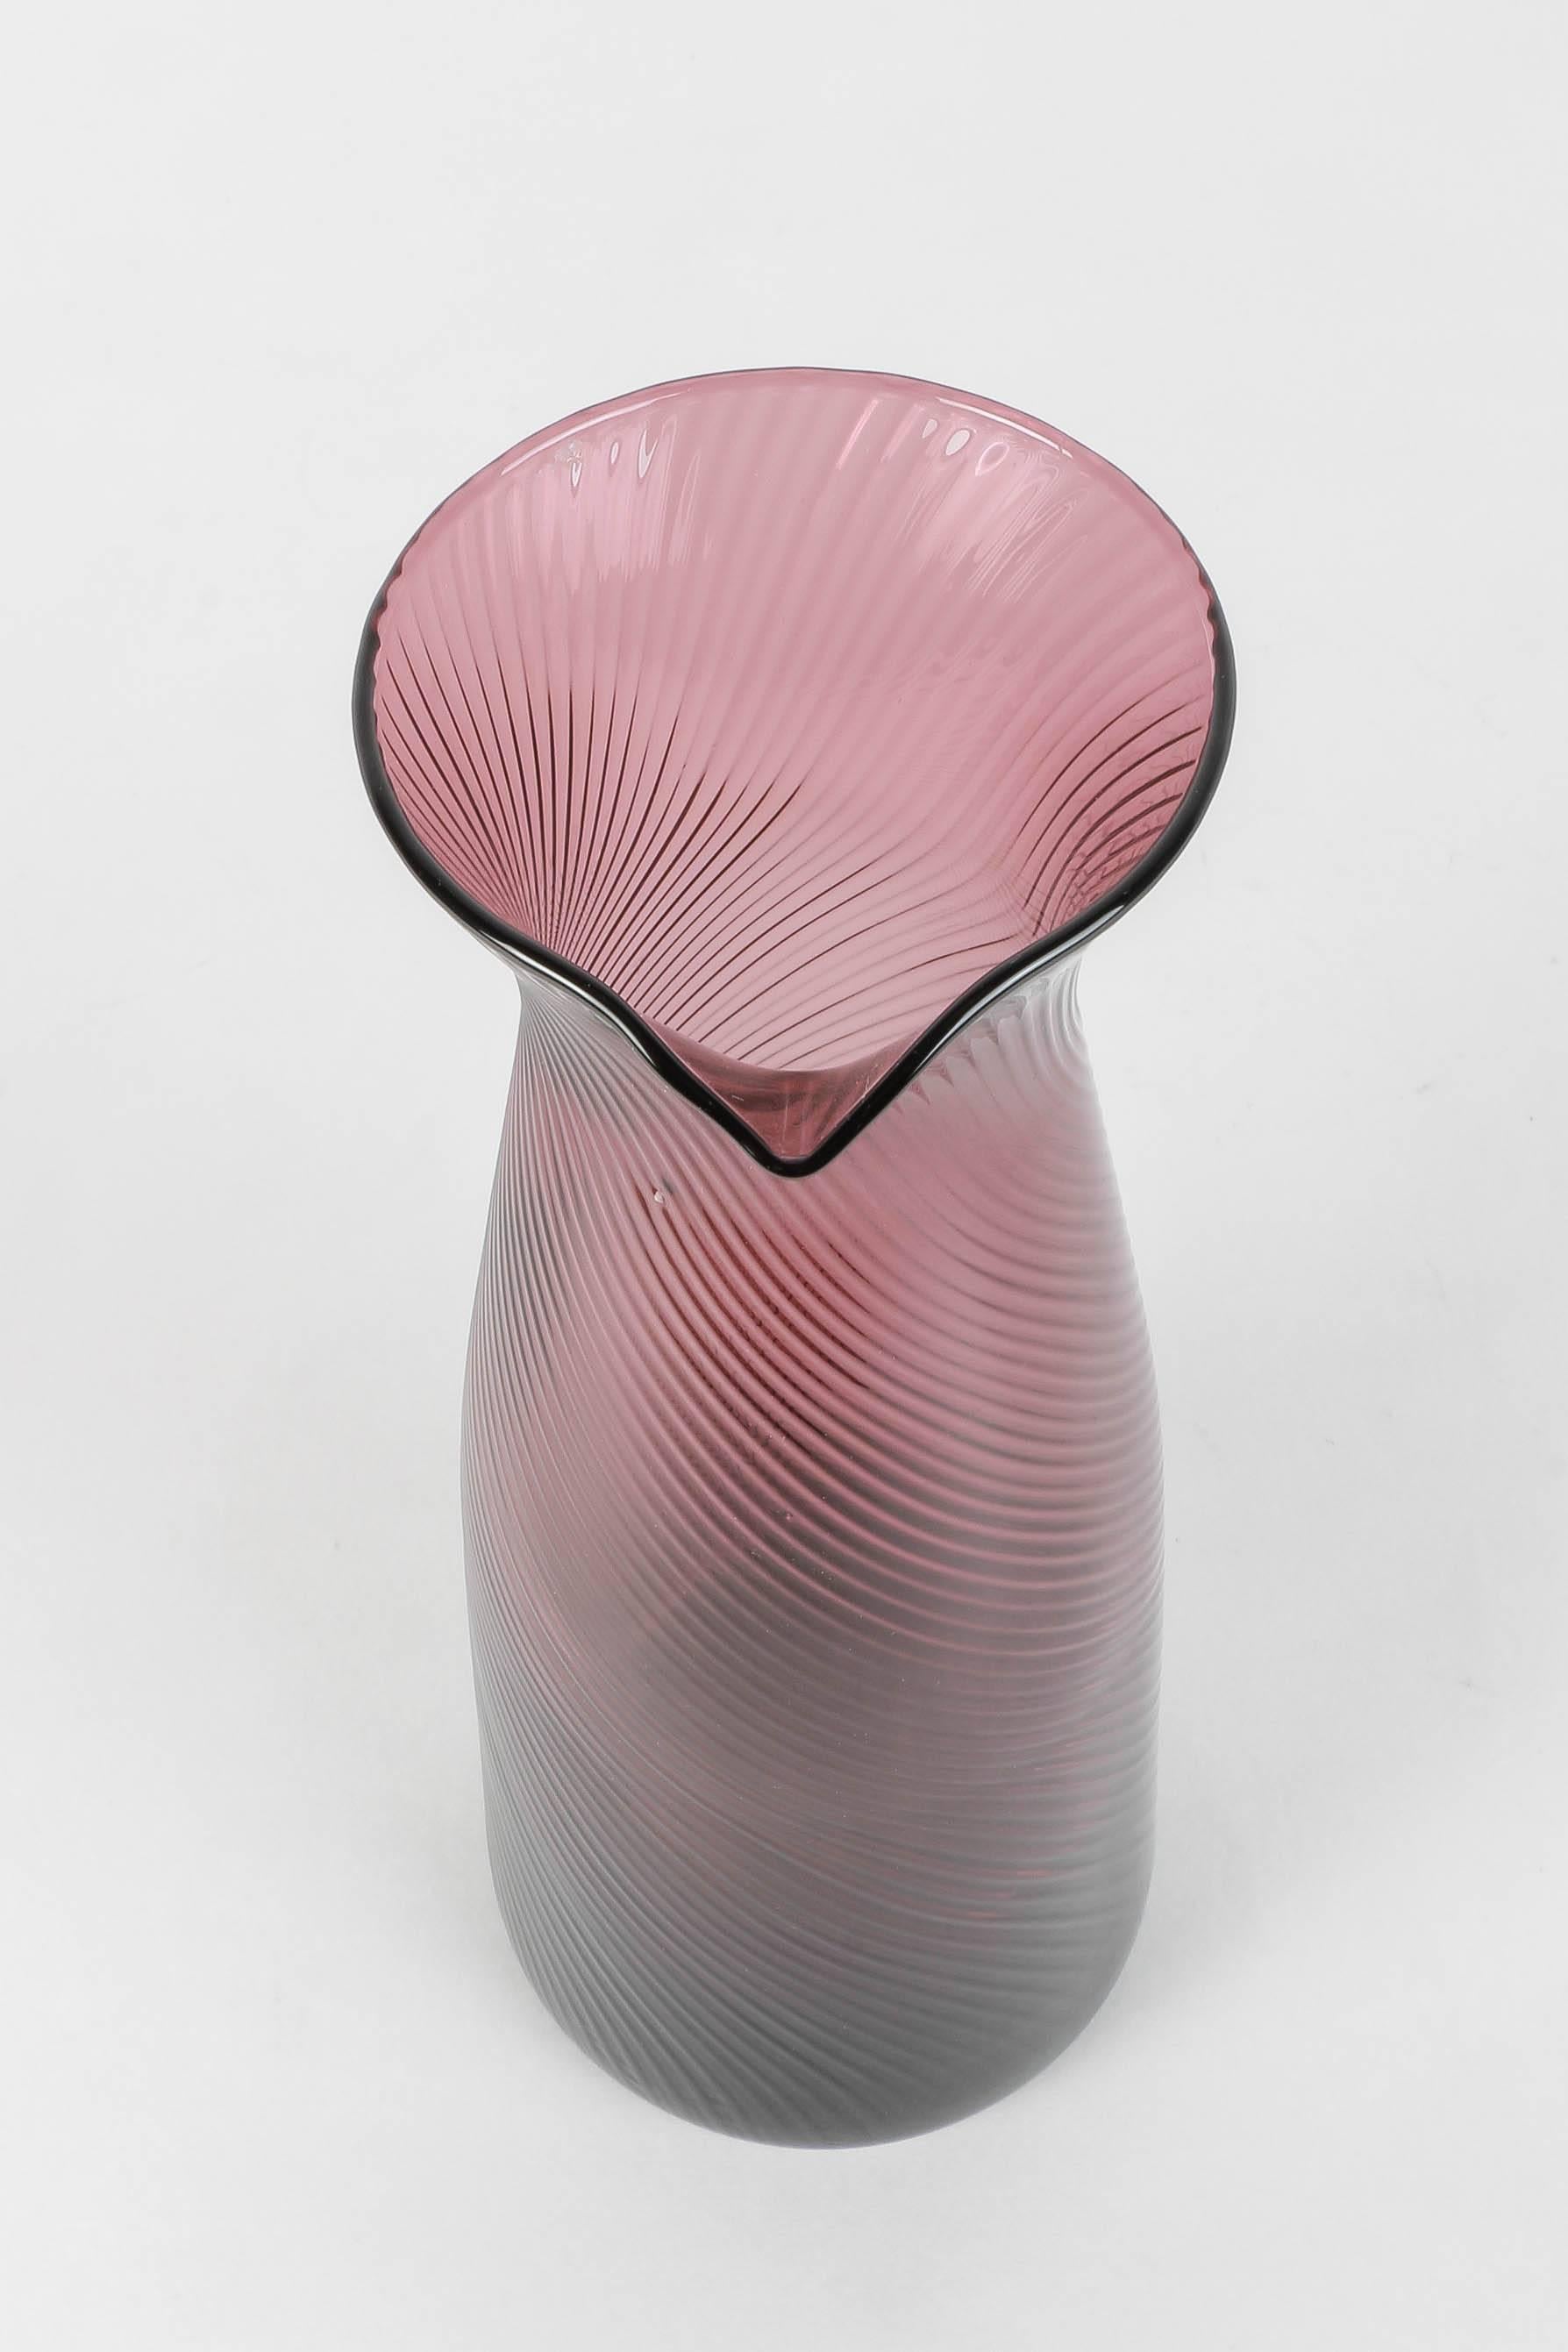 Mid-Century Modern Italian Glass Carafe by Venini Ribbed Texture, 1950